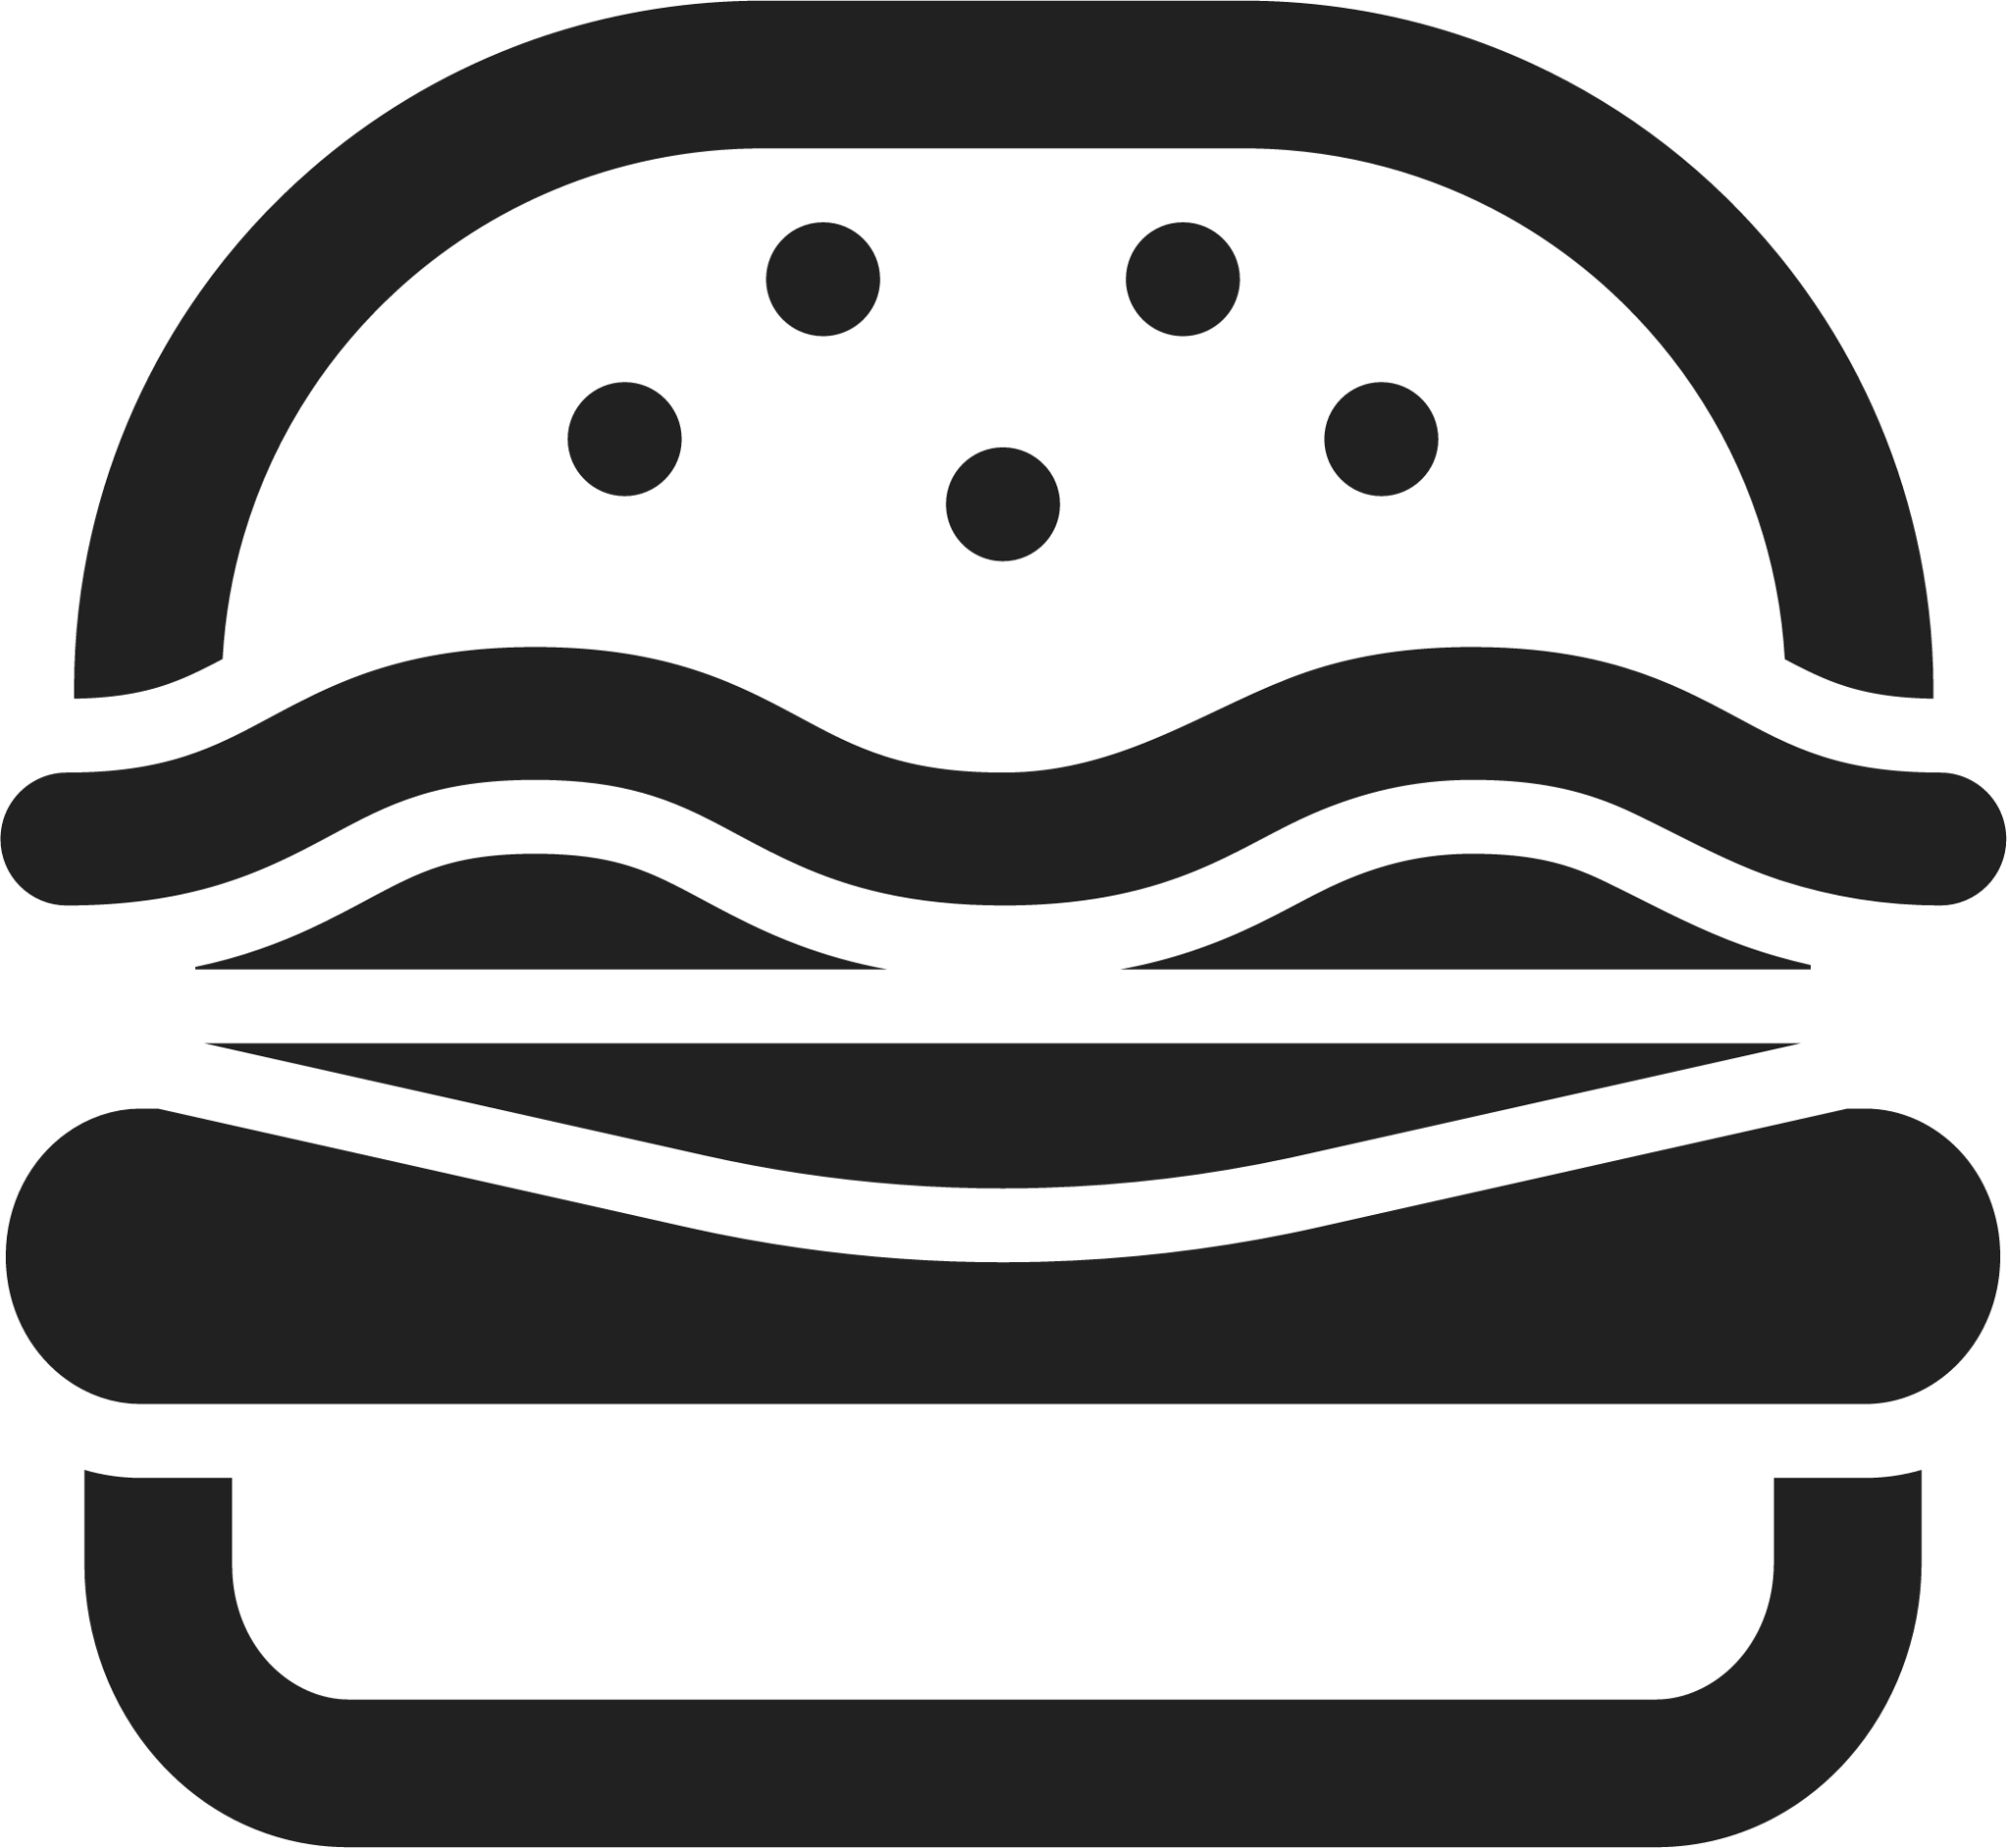 hamburger emoji